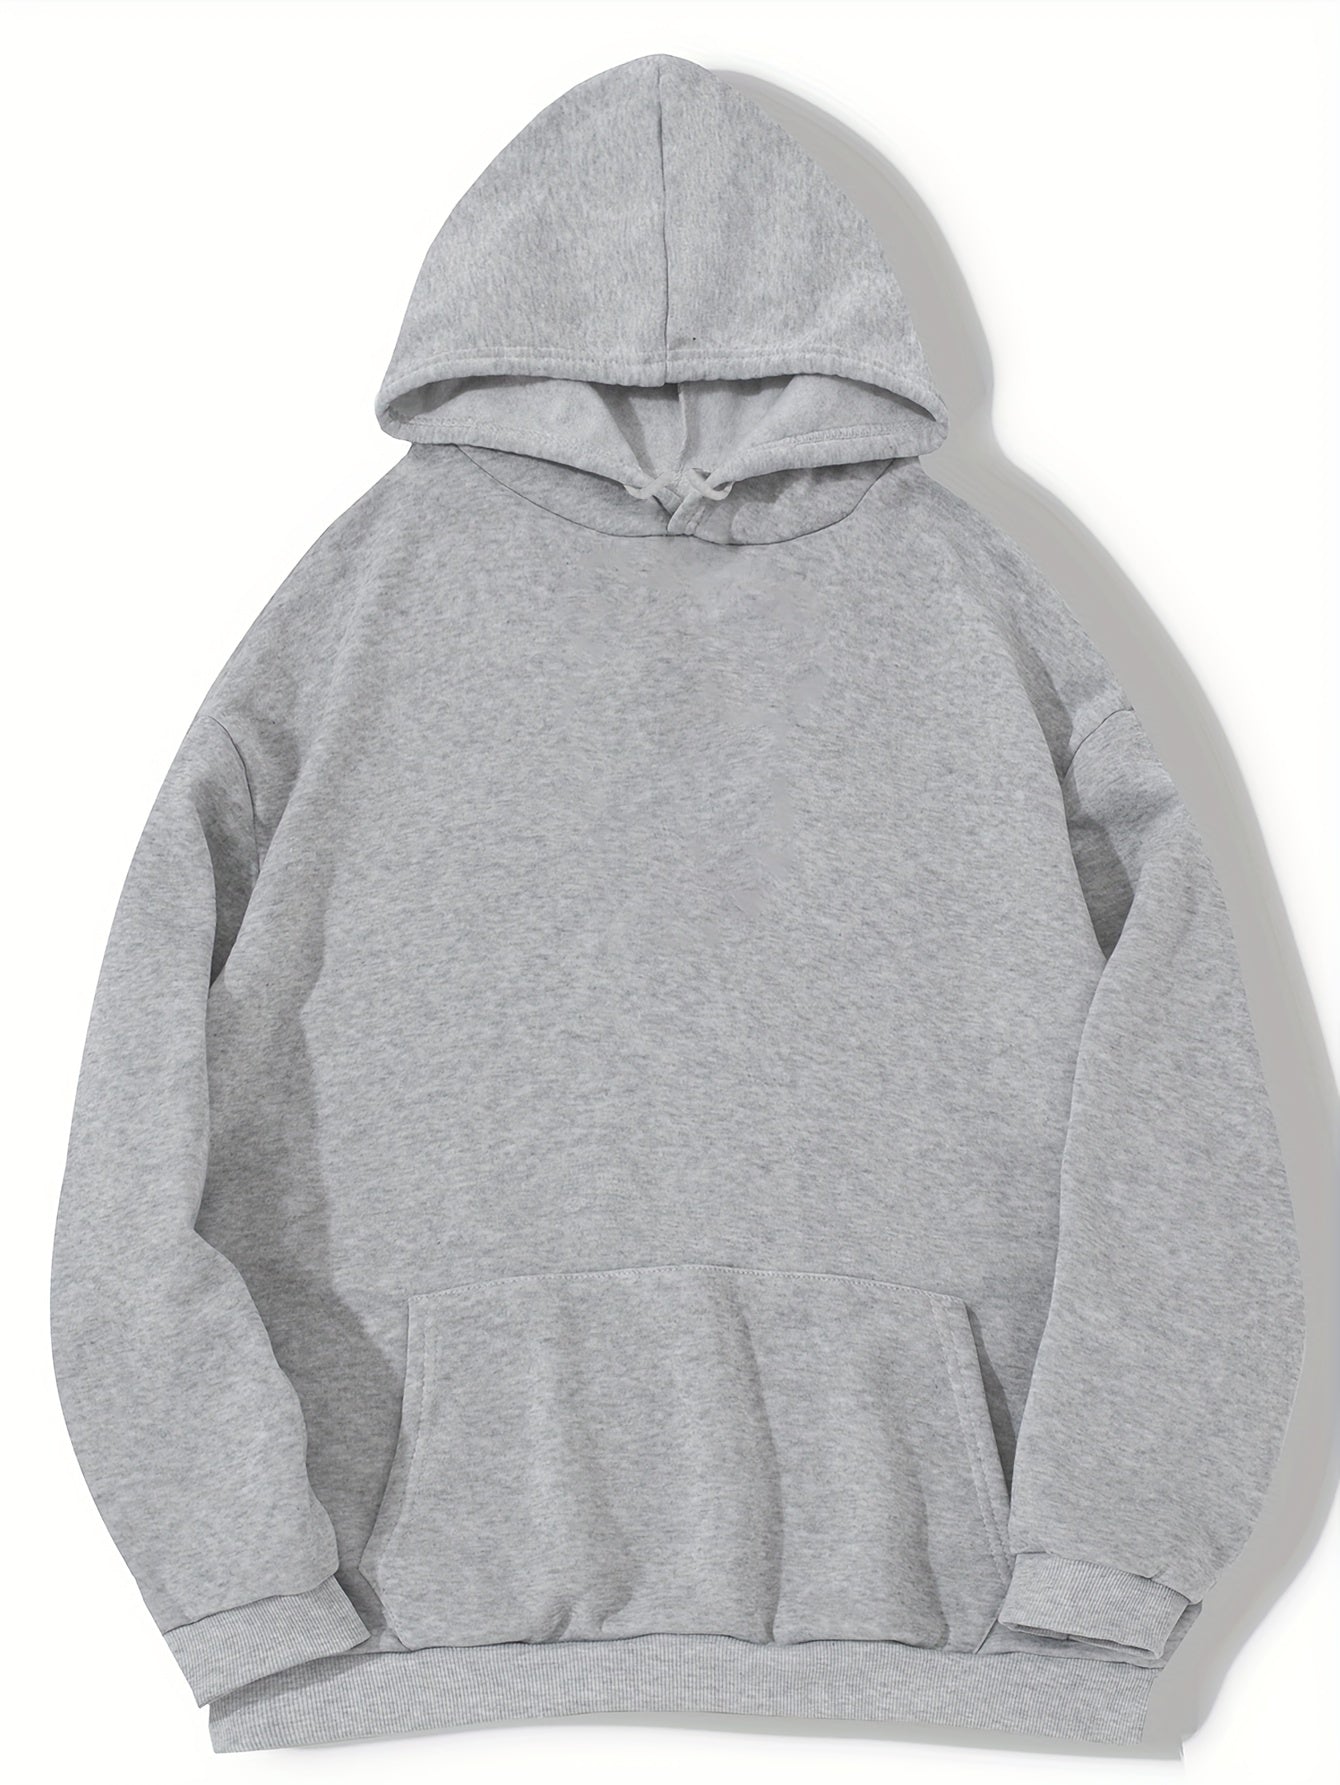 Antmvs Grey Thermal Hoodies, Kangaroo Pocket Casual Sweatshirt For Fall & Winter, Women's Clothing